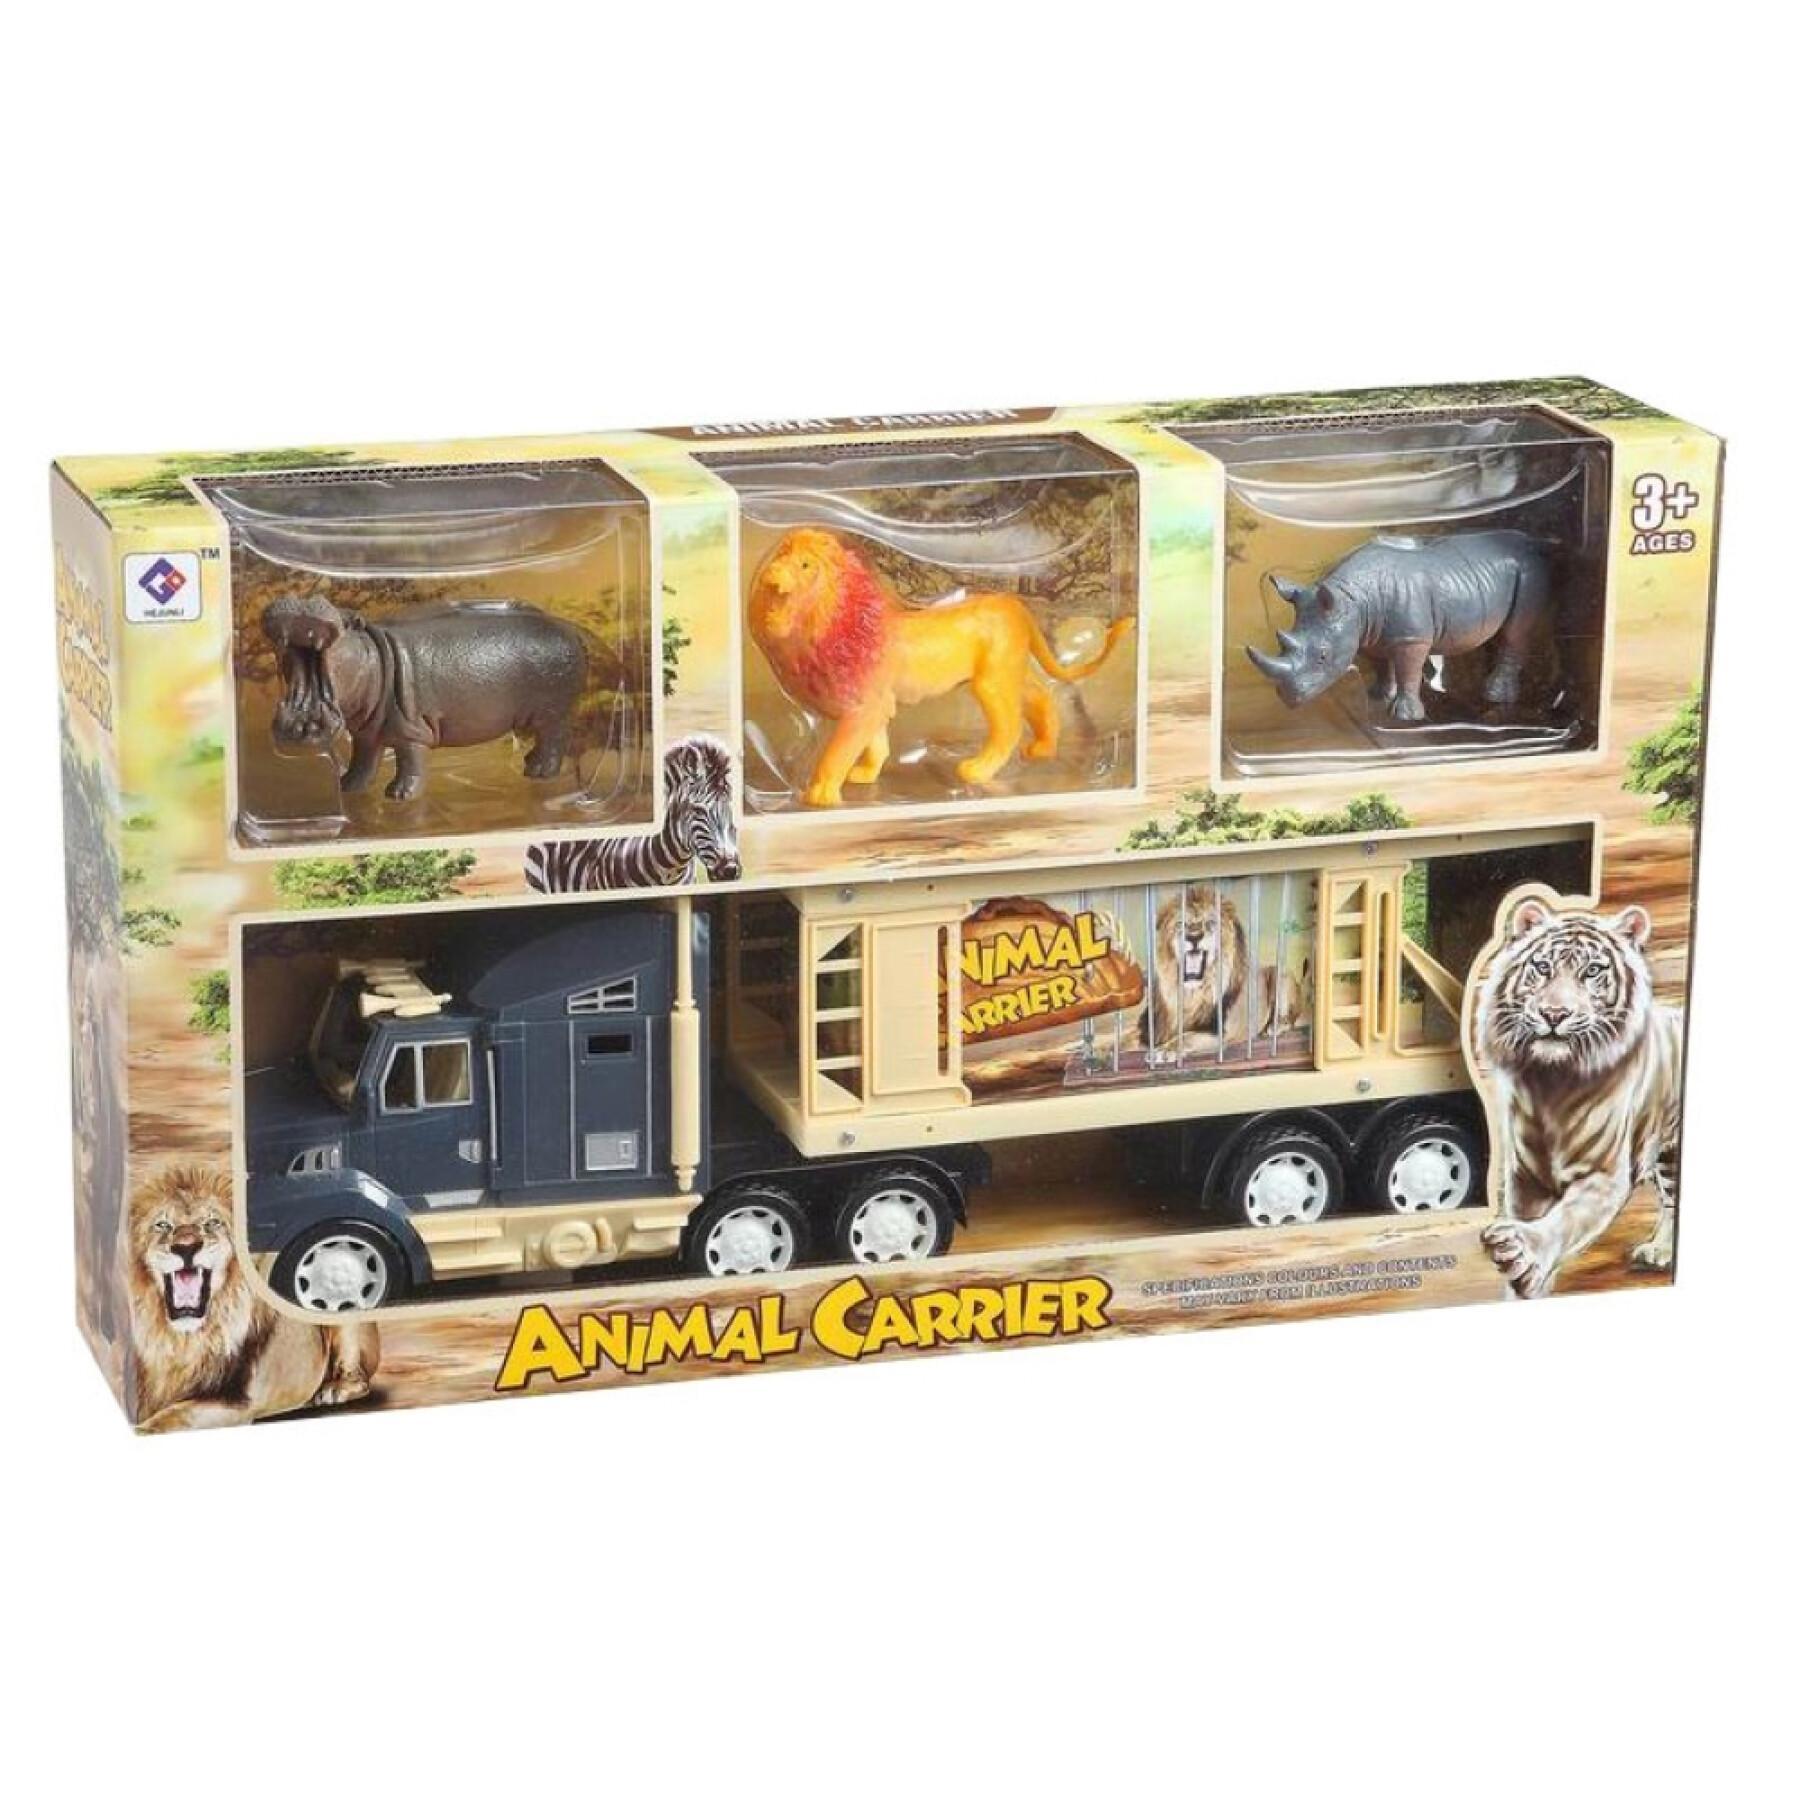 Animal truck 2 assorted models Fantastiko